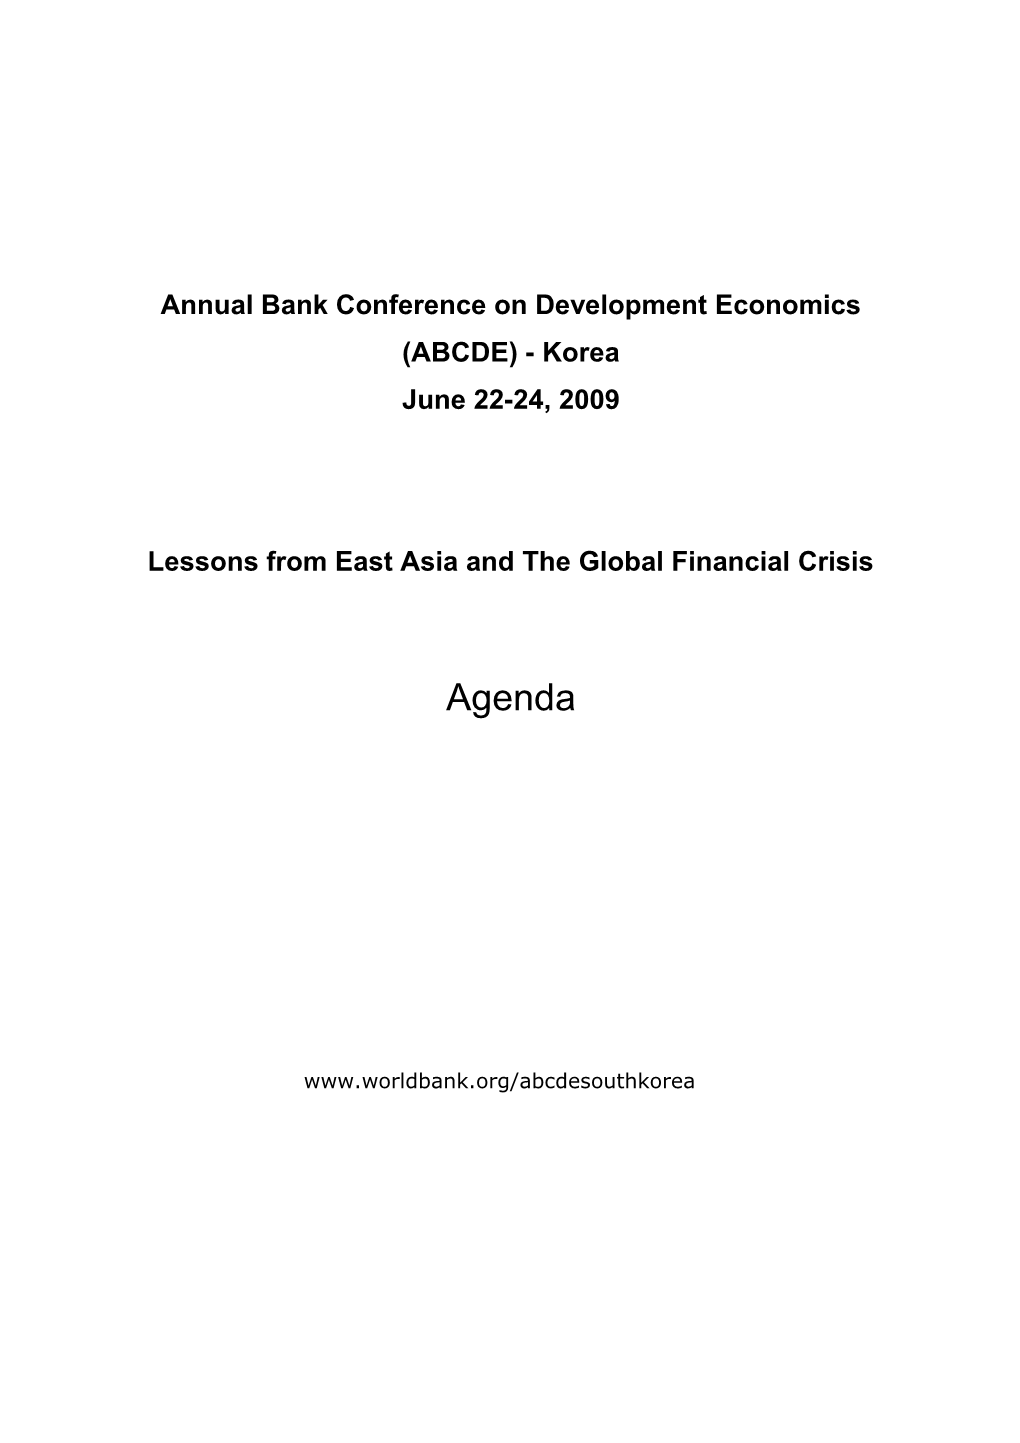 Annual Bank Conference on Development Economics (ABCDE) - Korea